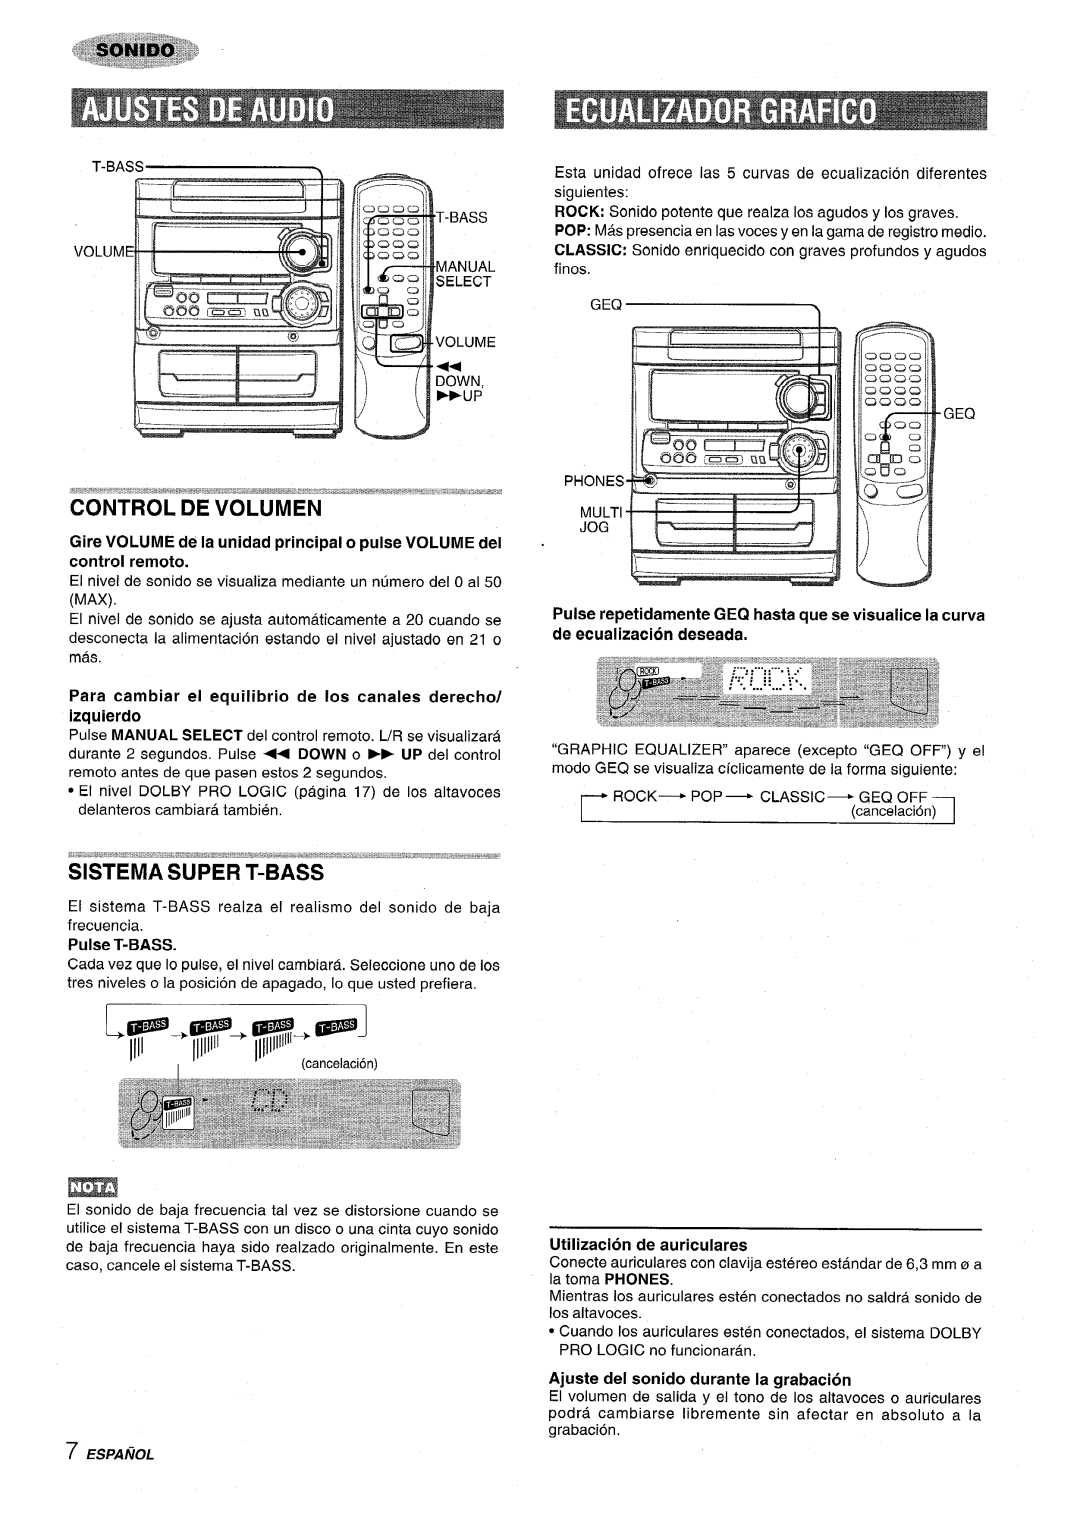 Sony NSX-MT320 Sistema Super T-Bass, Gire VOLUME de la unidad principal o pulse VOLUME del control remoto, Pulse T-BASS 